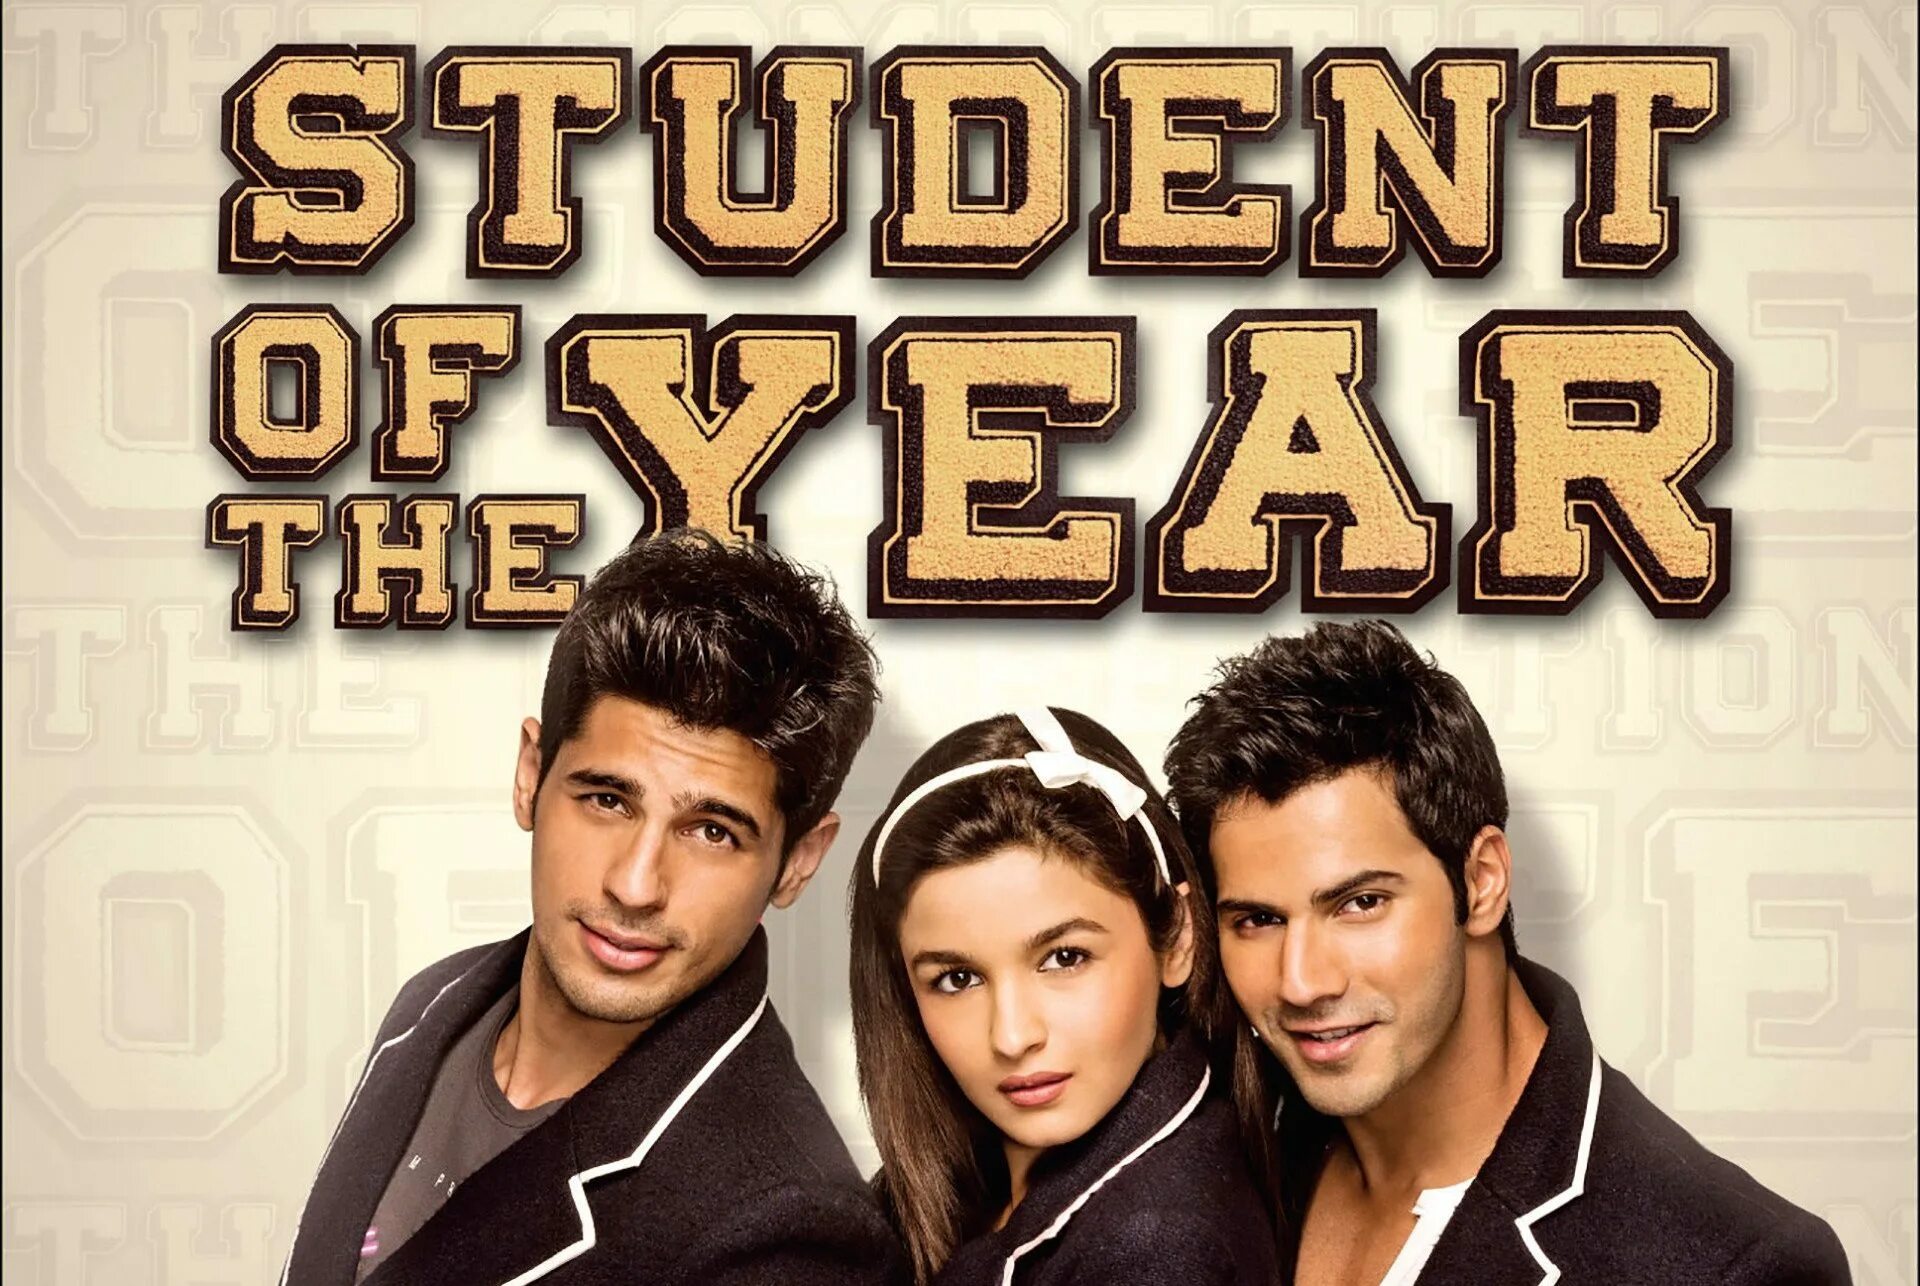 Student of love. Student of the year. Индийская группа.